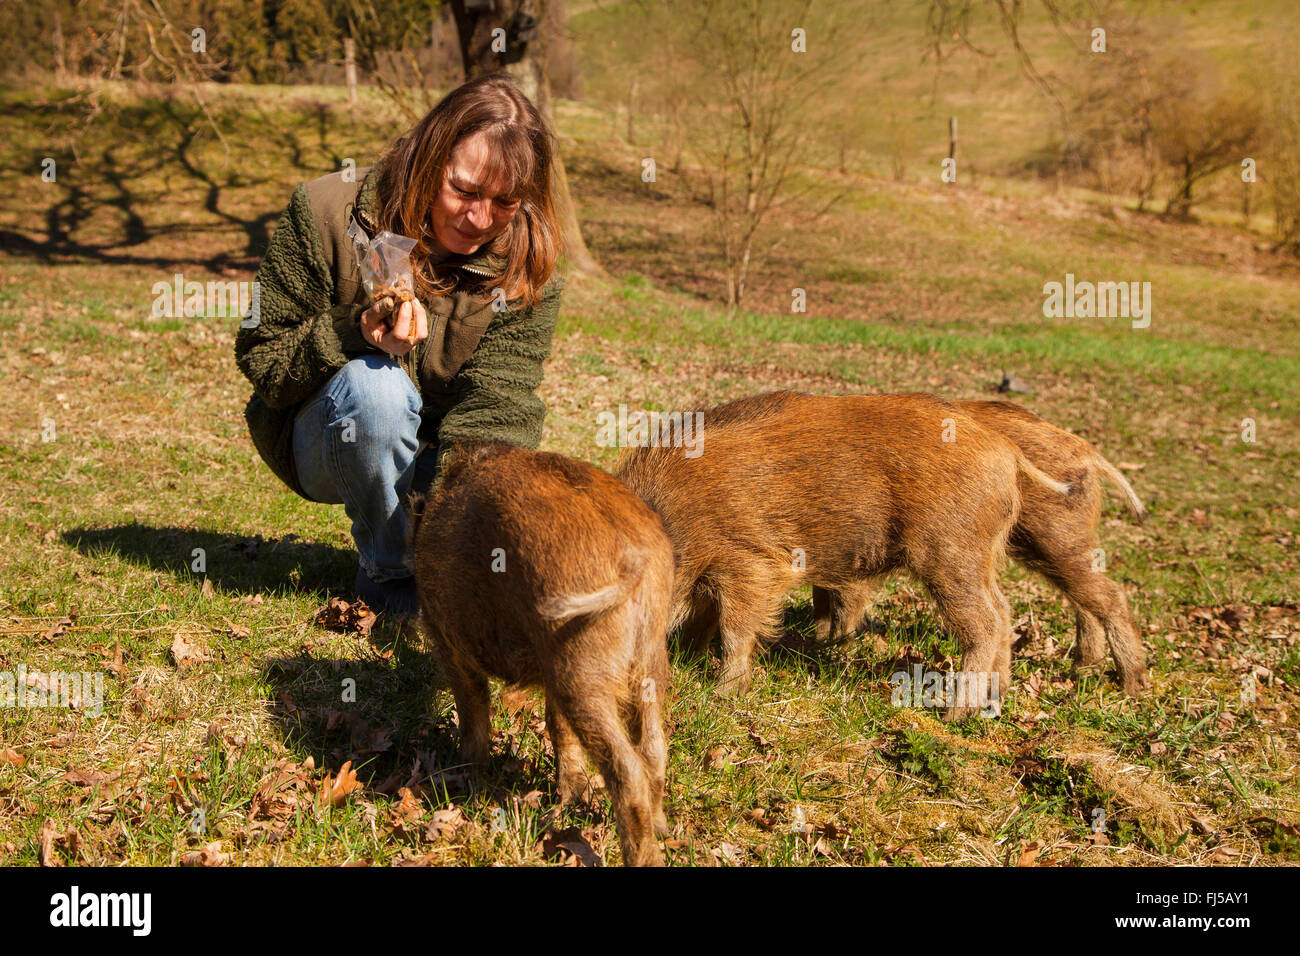 wild boar, pig, wild boar (Sus scrofa), woman feeding young wild boars, Germany, Rhineland-Palatinate Stock Photo